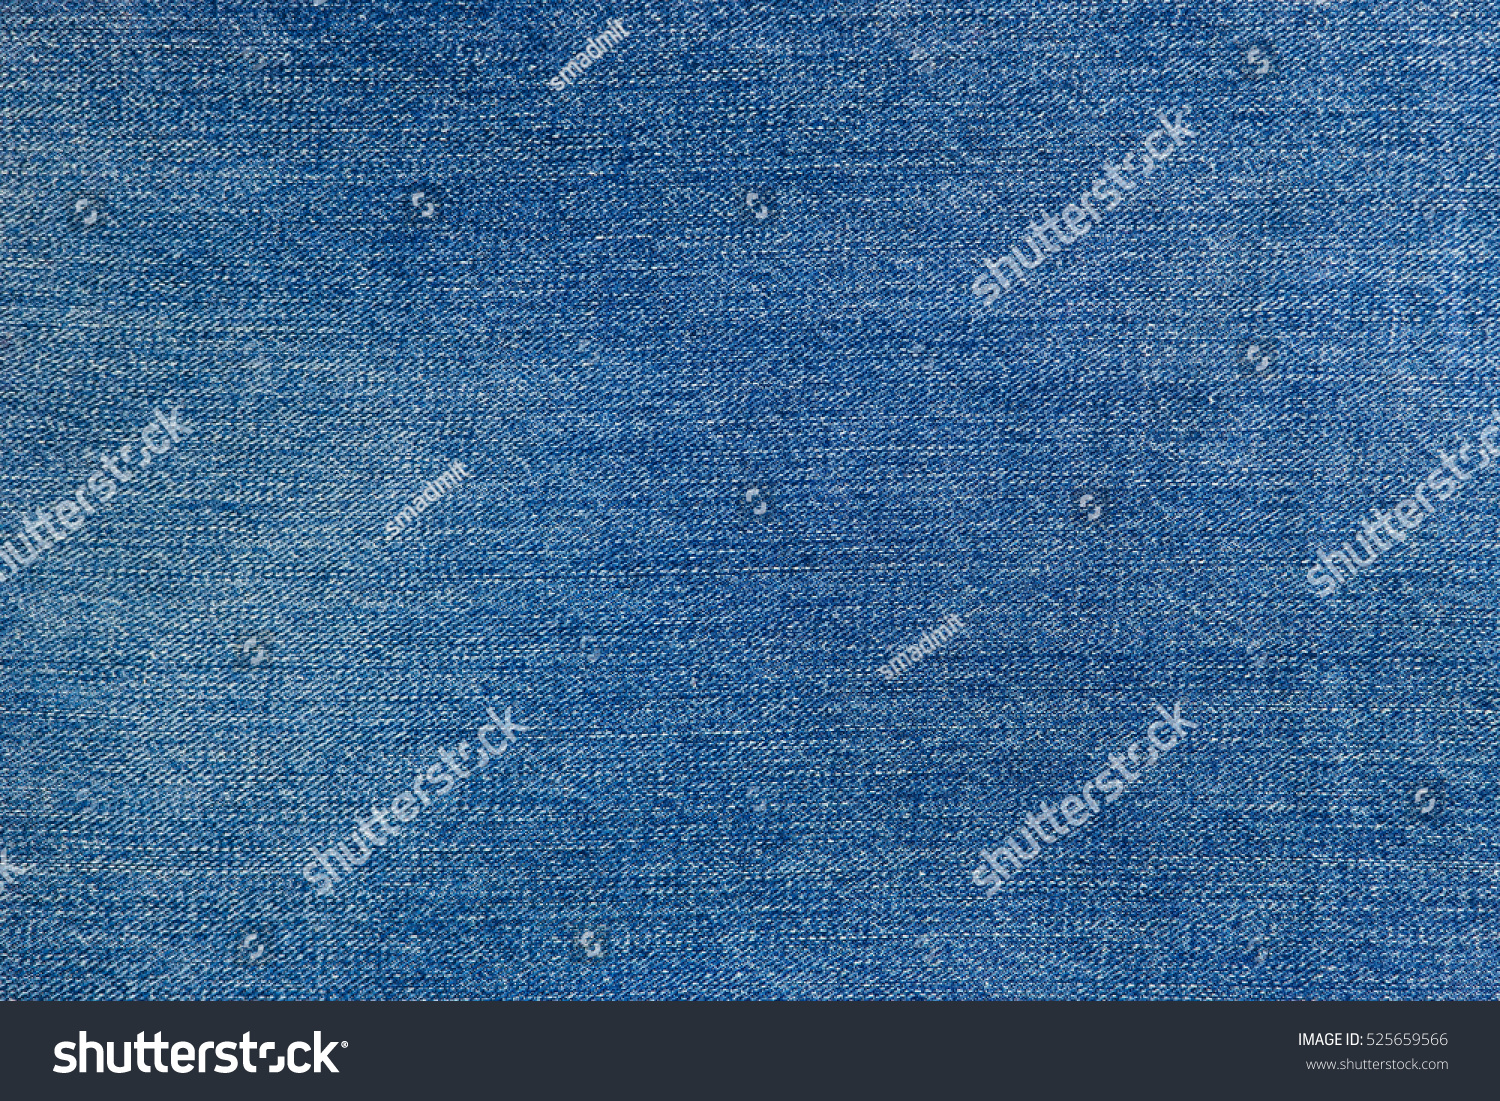 Horisontal Bright Blue Jeans Texture Denim Stock Photo 525659566 ...